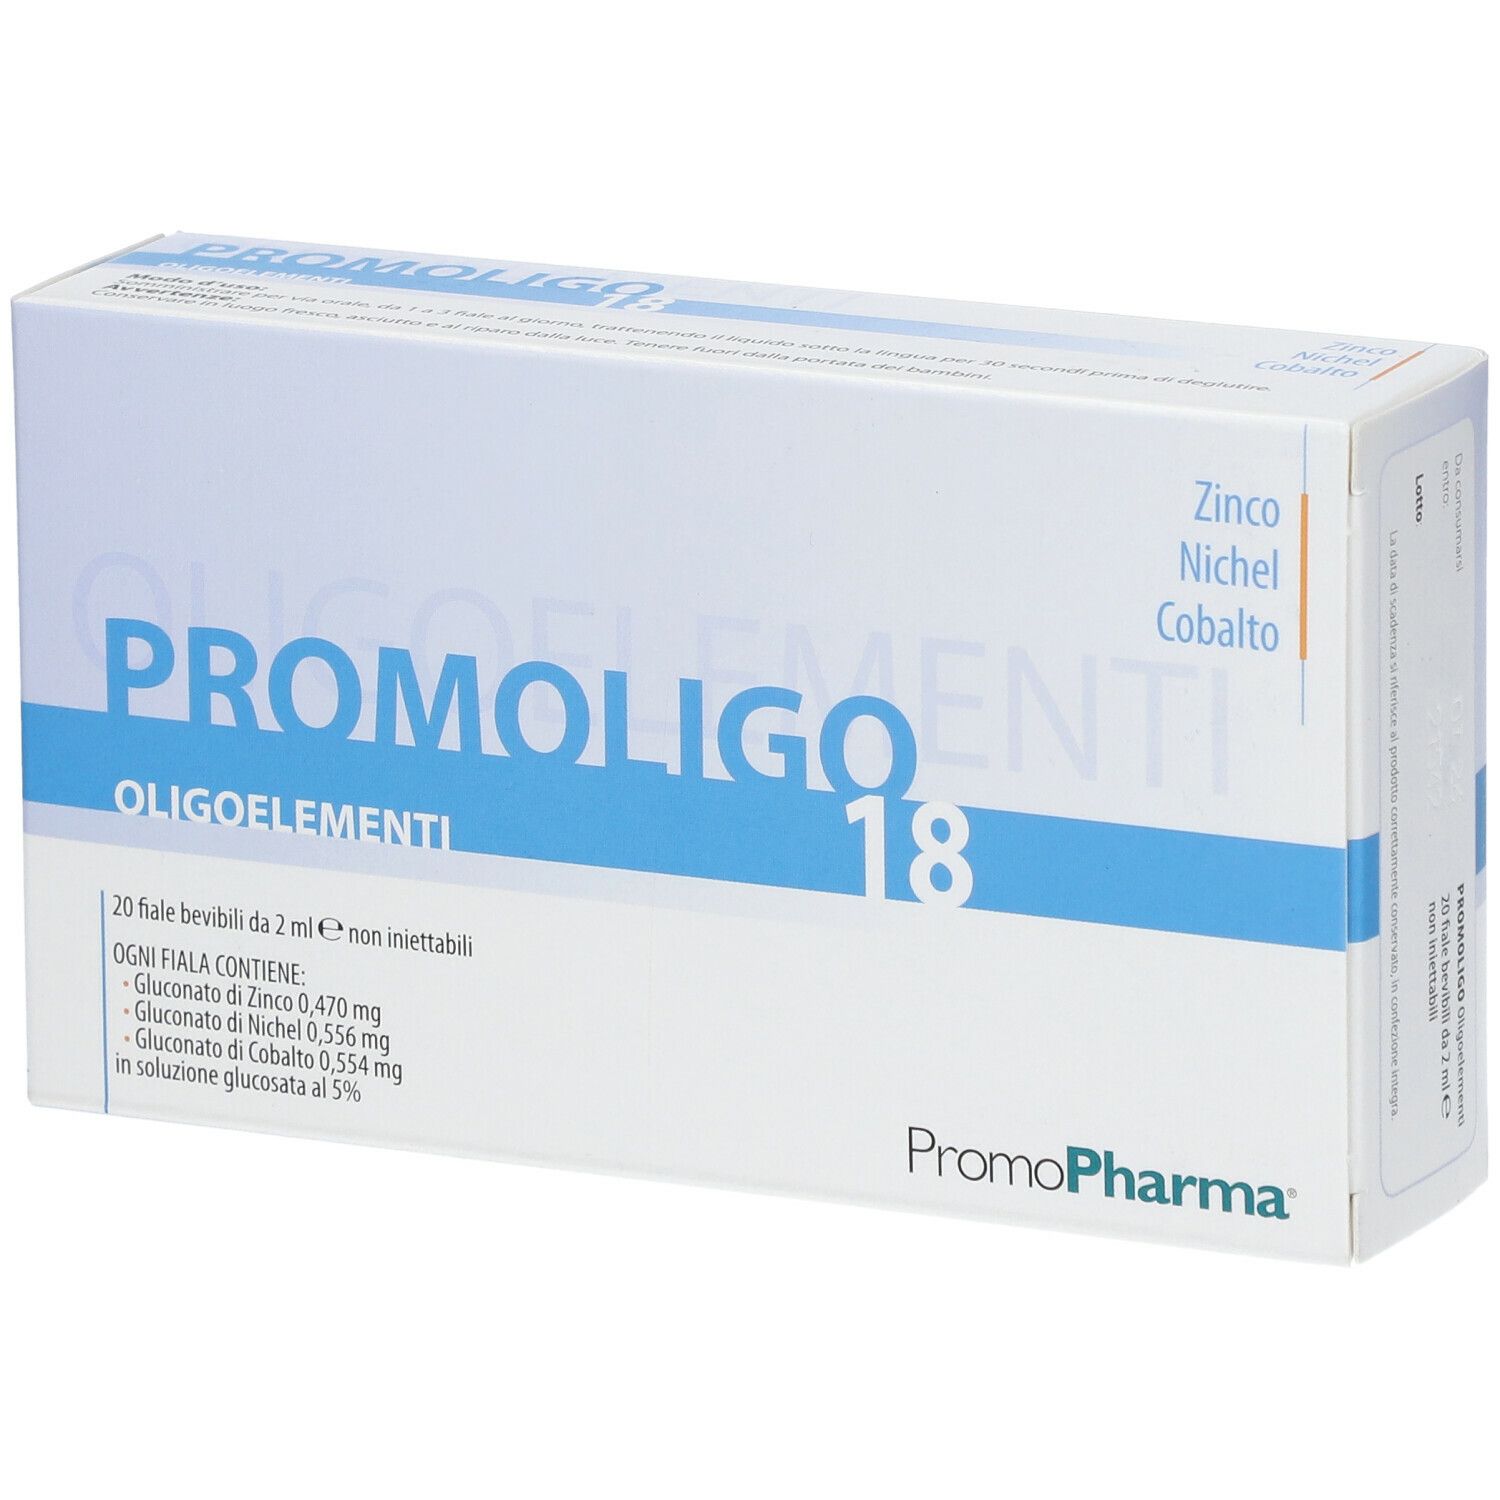 PromoPharma® PROMOLIGO 18 Zinco/Nichel/Cobalto Oligoelementi